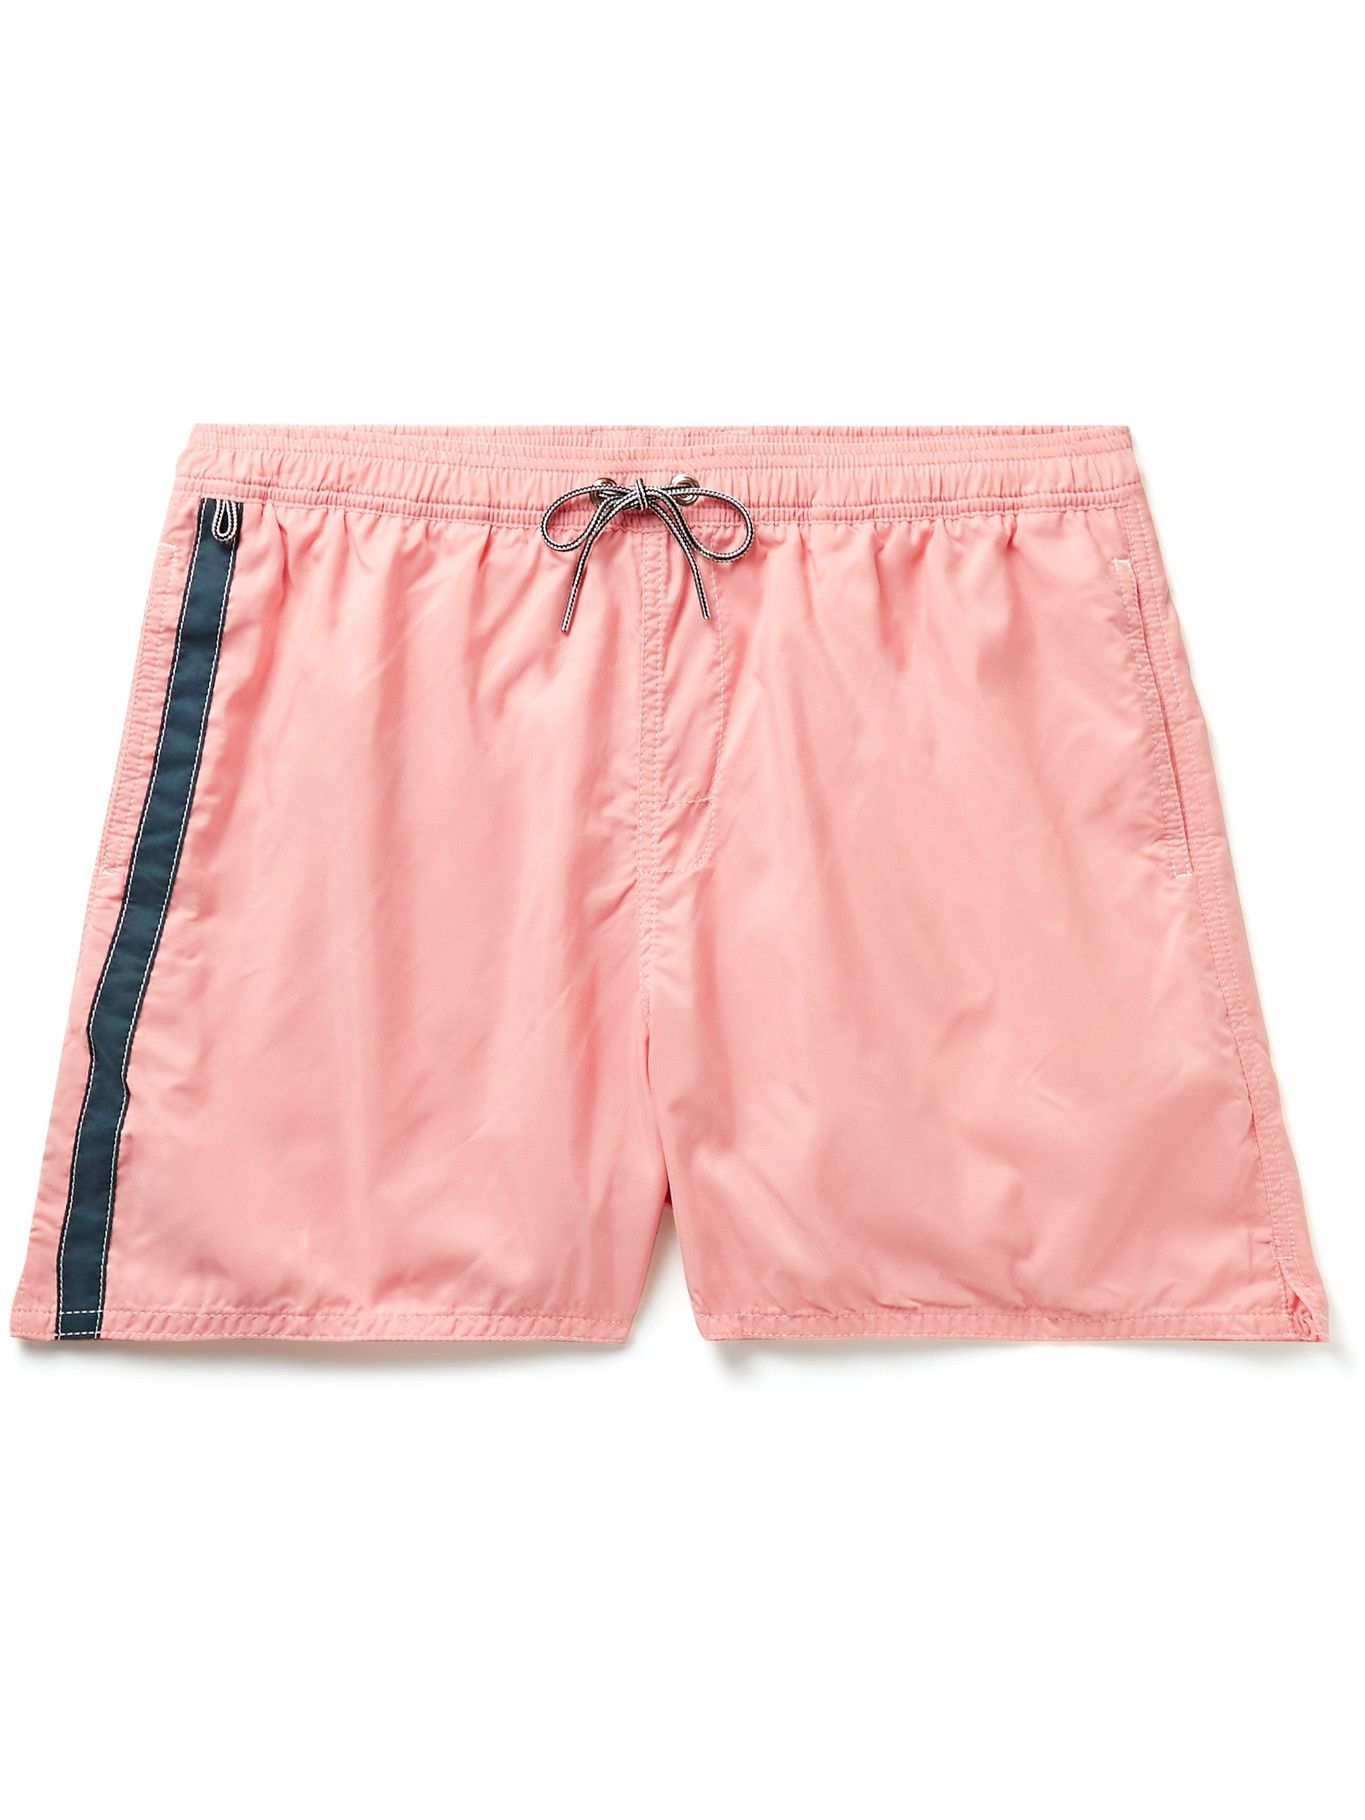 BIRDWELL - Mid-Length Striped Swim Shorts - Pink Birdwell